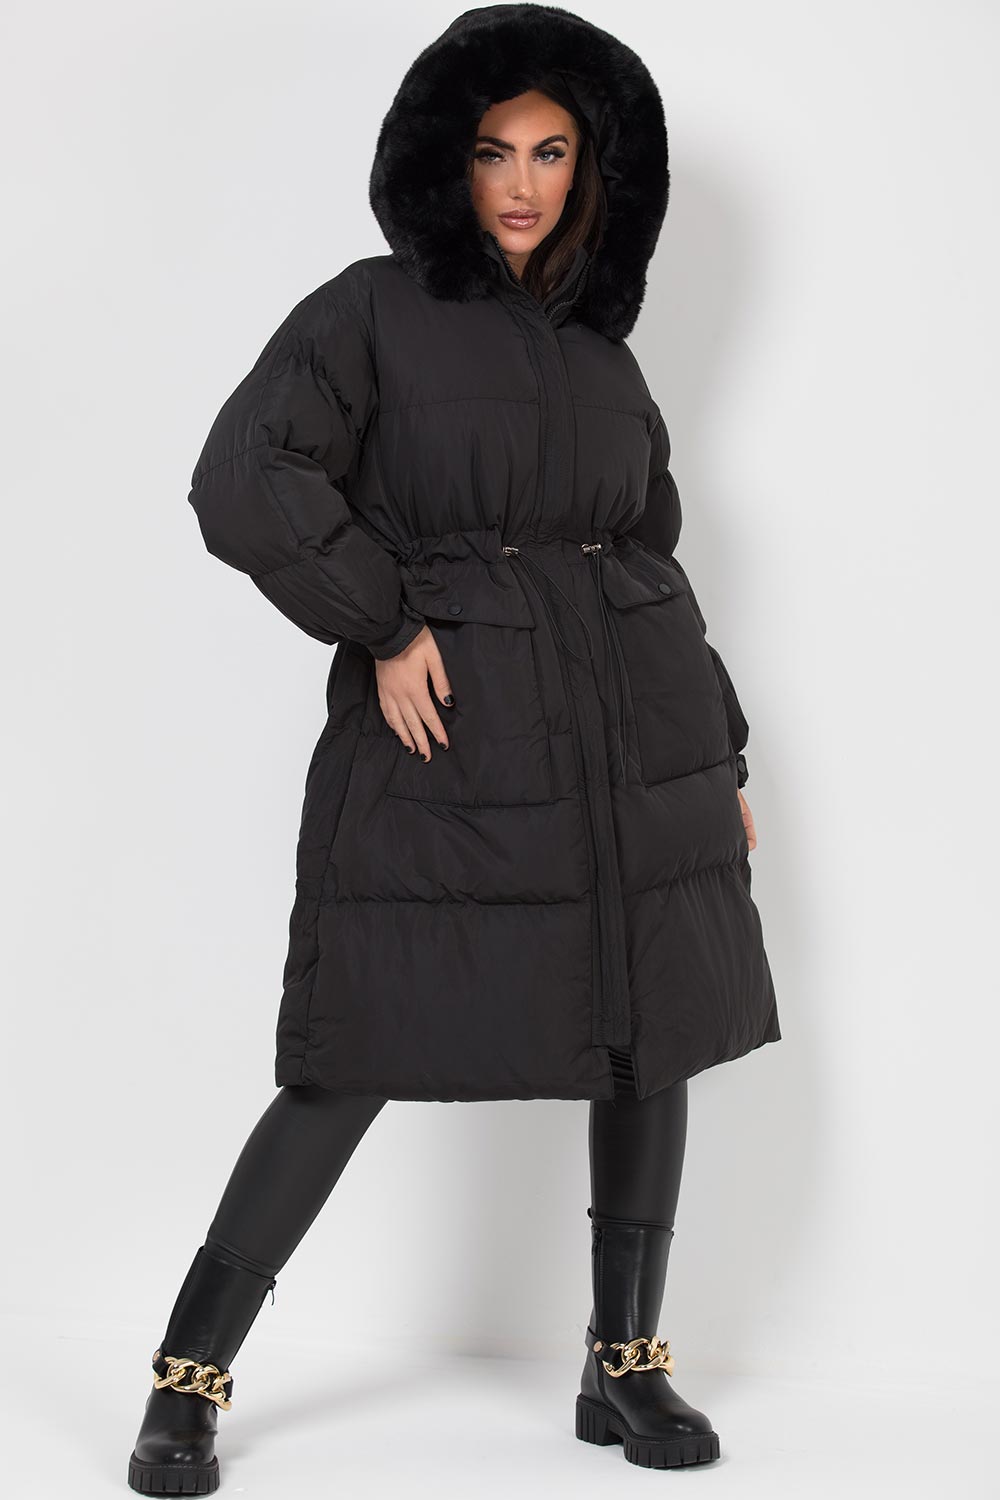 long black puffer coat